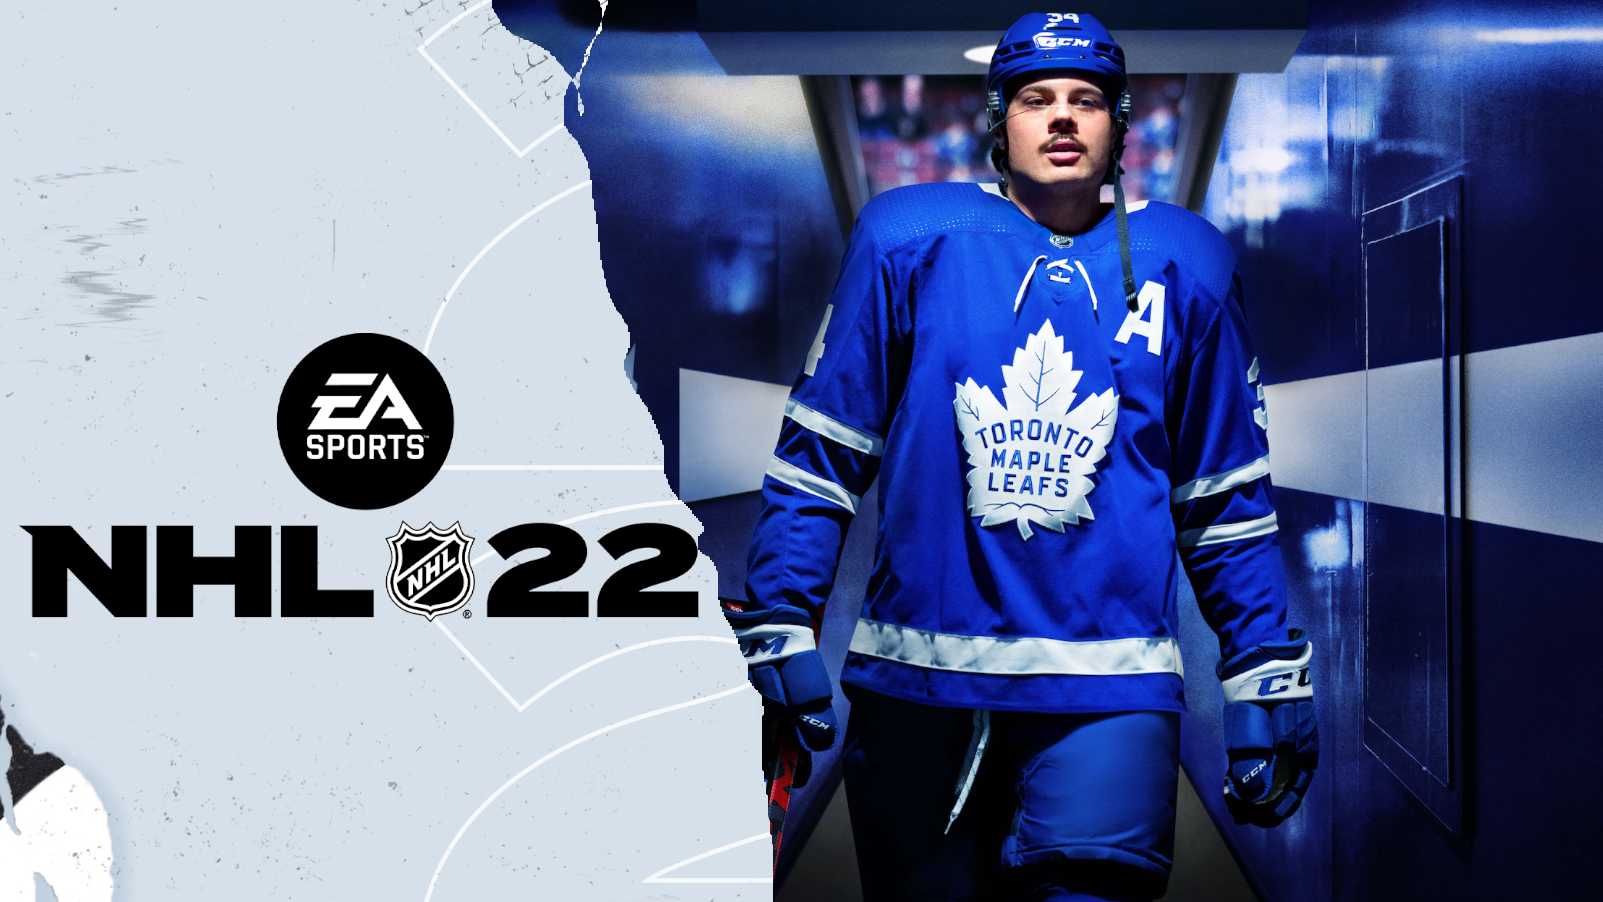 Nhl nintendo. НХЛ 22 EA Sports. НХЛ на Нинтендо свитч. NHL 22 Nintendo Switch. Виртуальный хоккей.